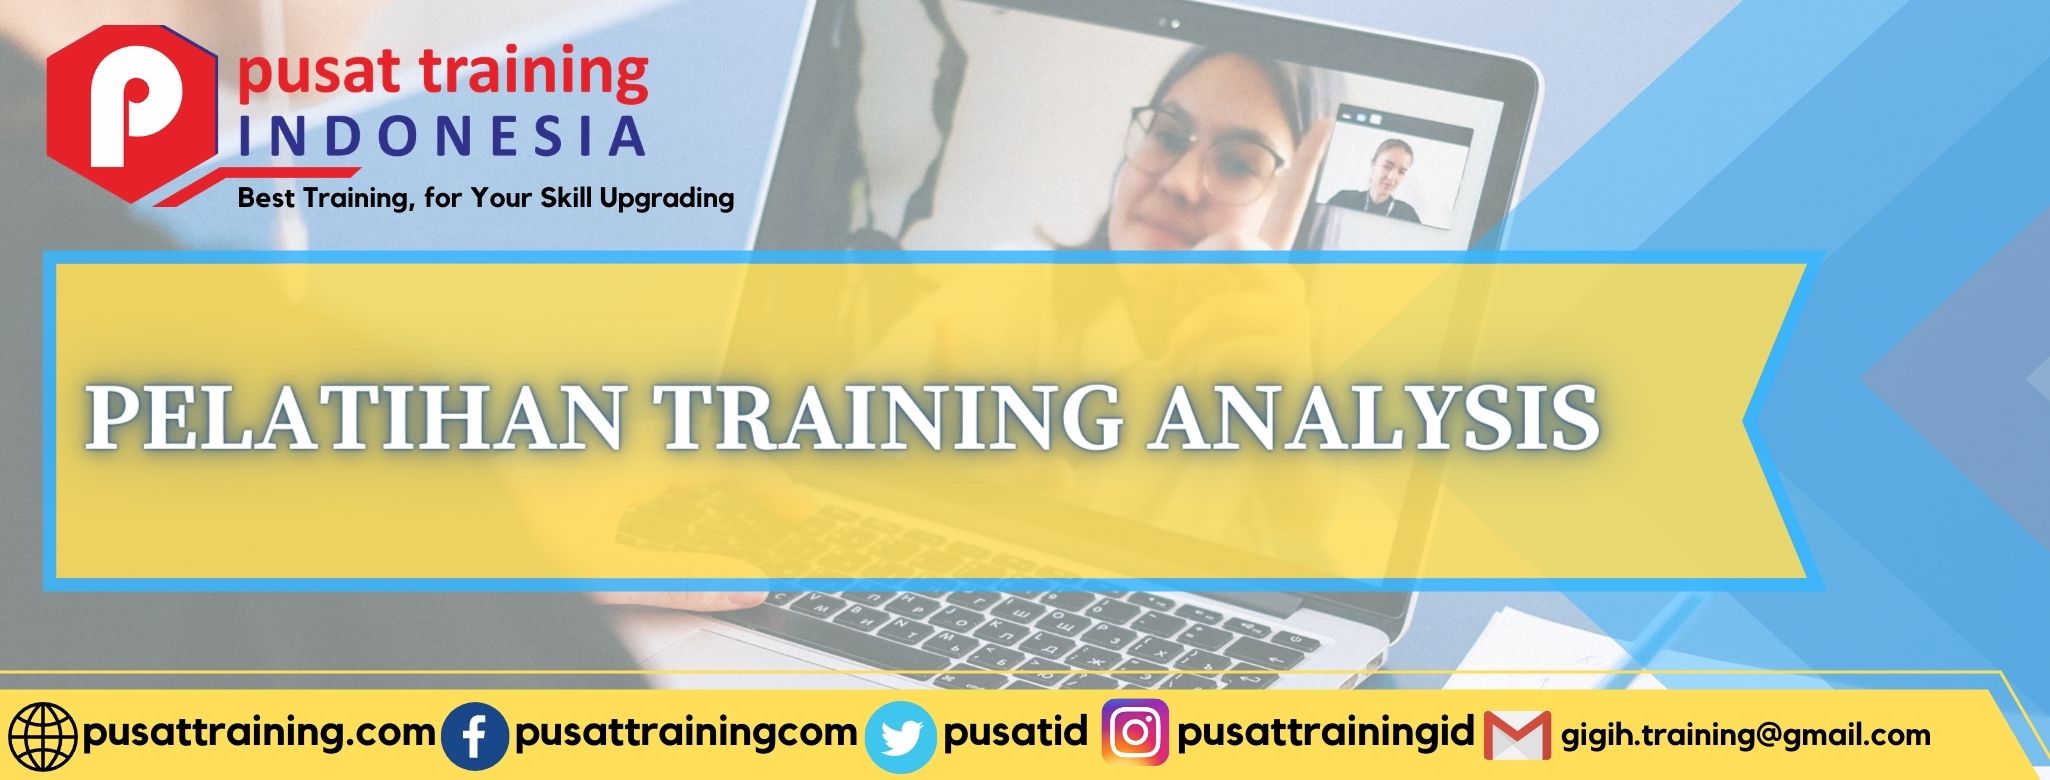 pelatihan-training-analysis